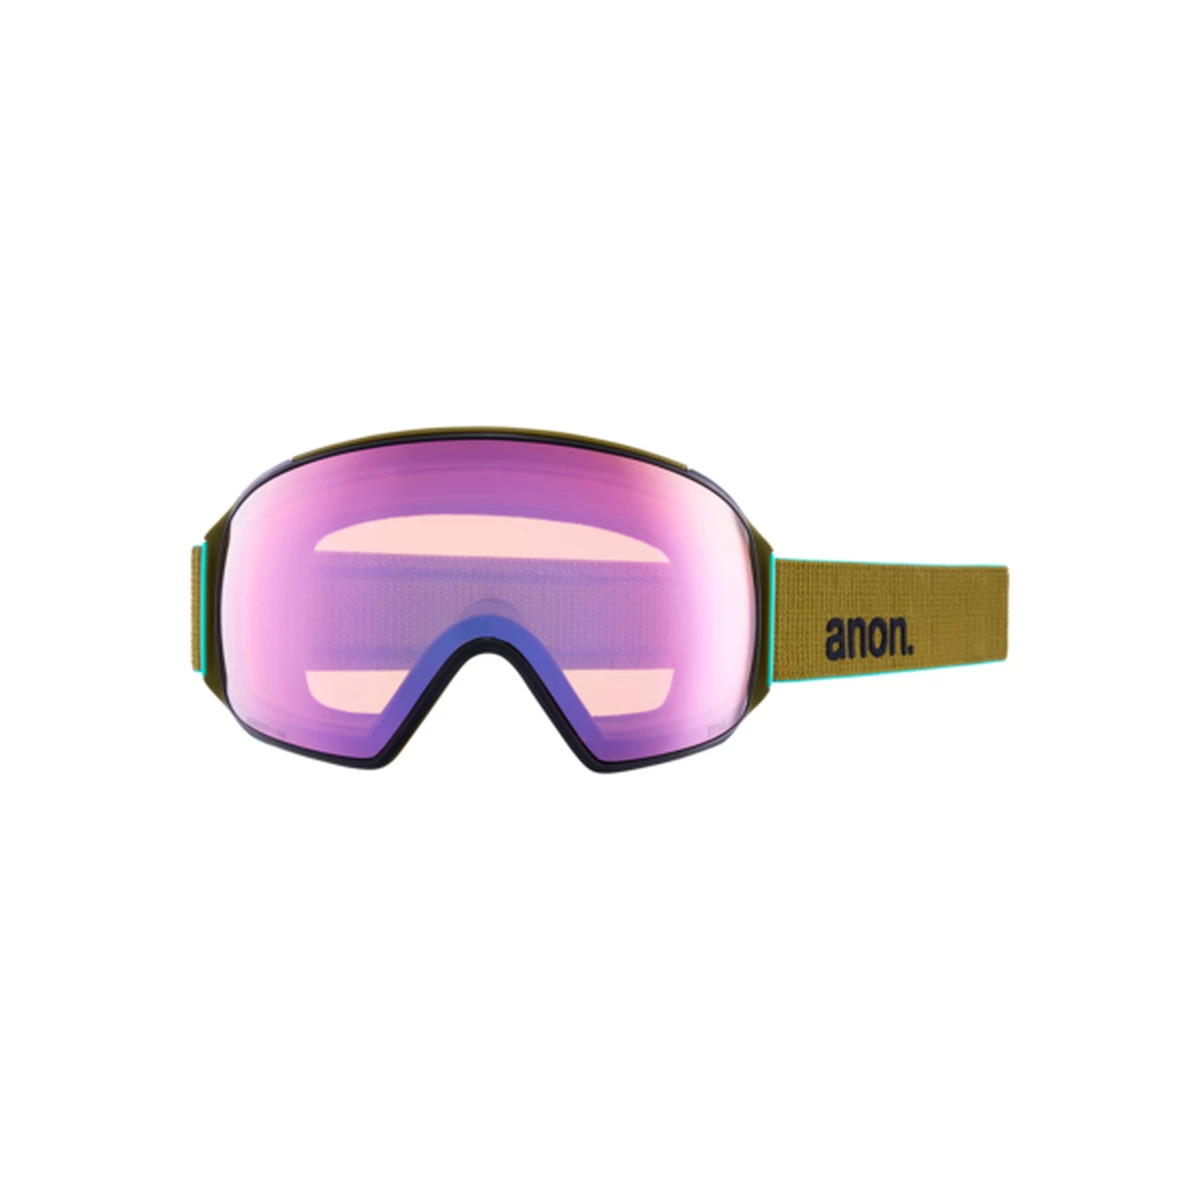 Anon M4 Toric Skibril - Goggles - Accessoires - Wintersport - Intersport van Broek / Biggelaar